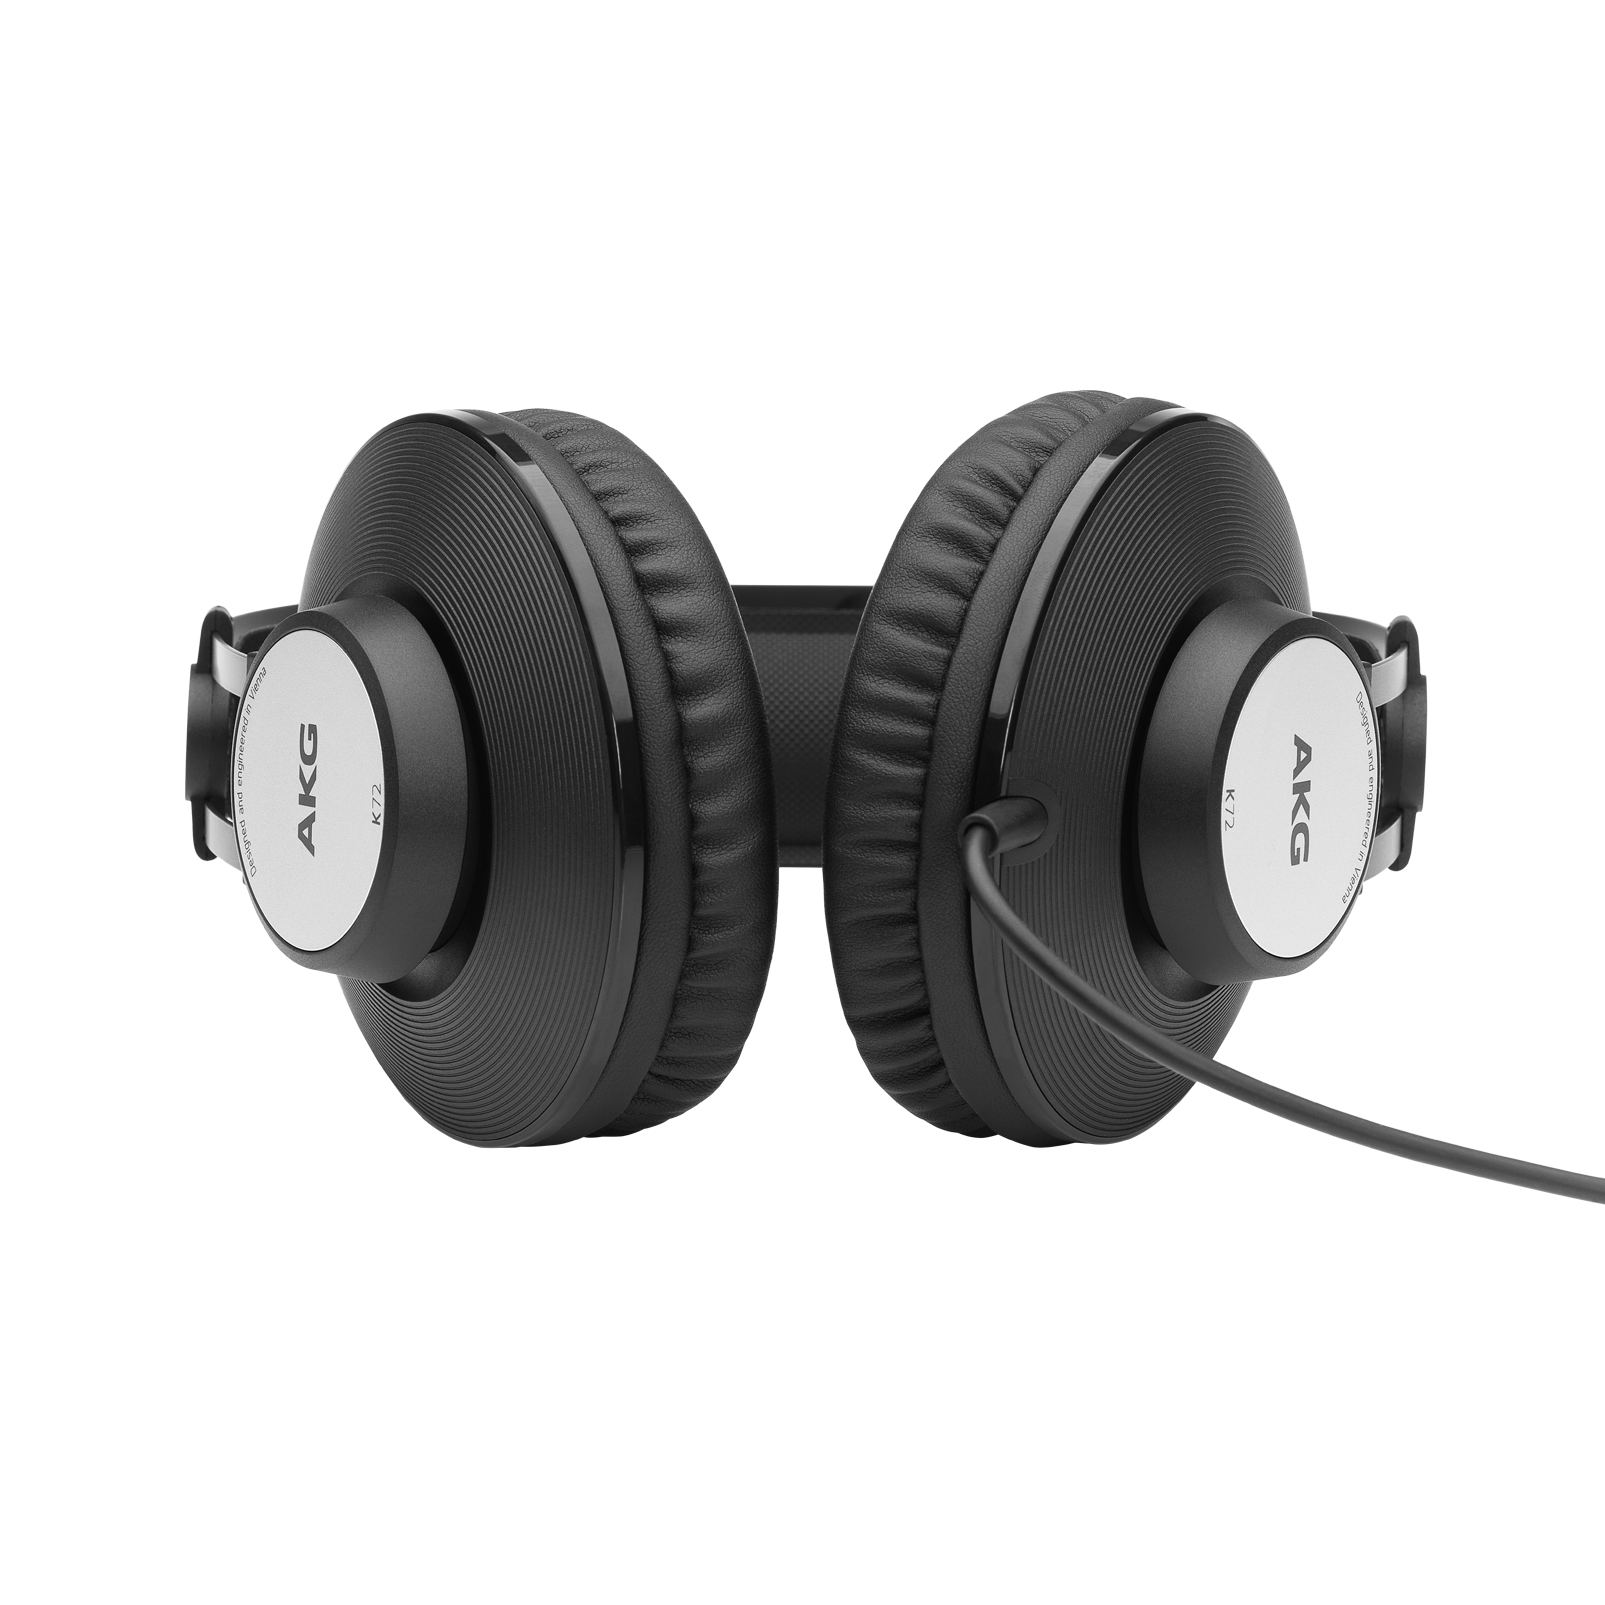 K72 - Black - Closed-back studio headphones  - Detailshot 1